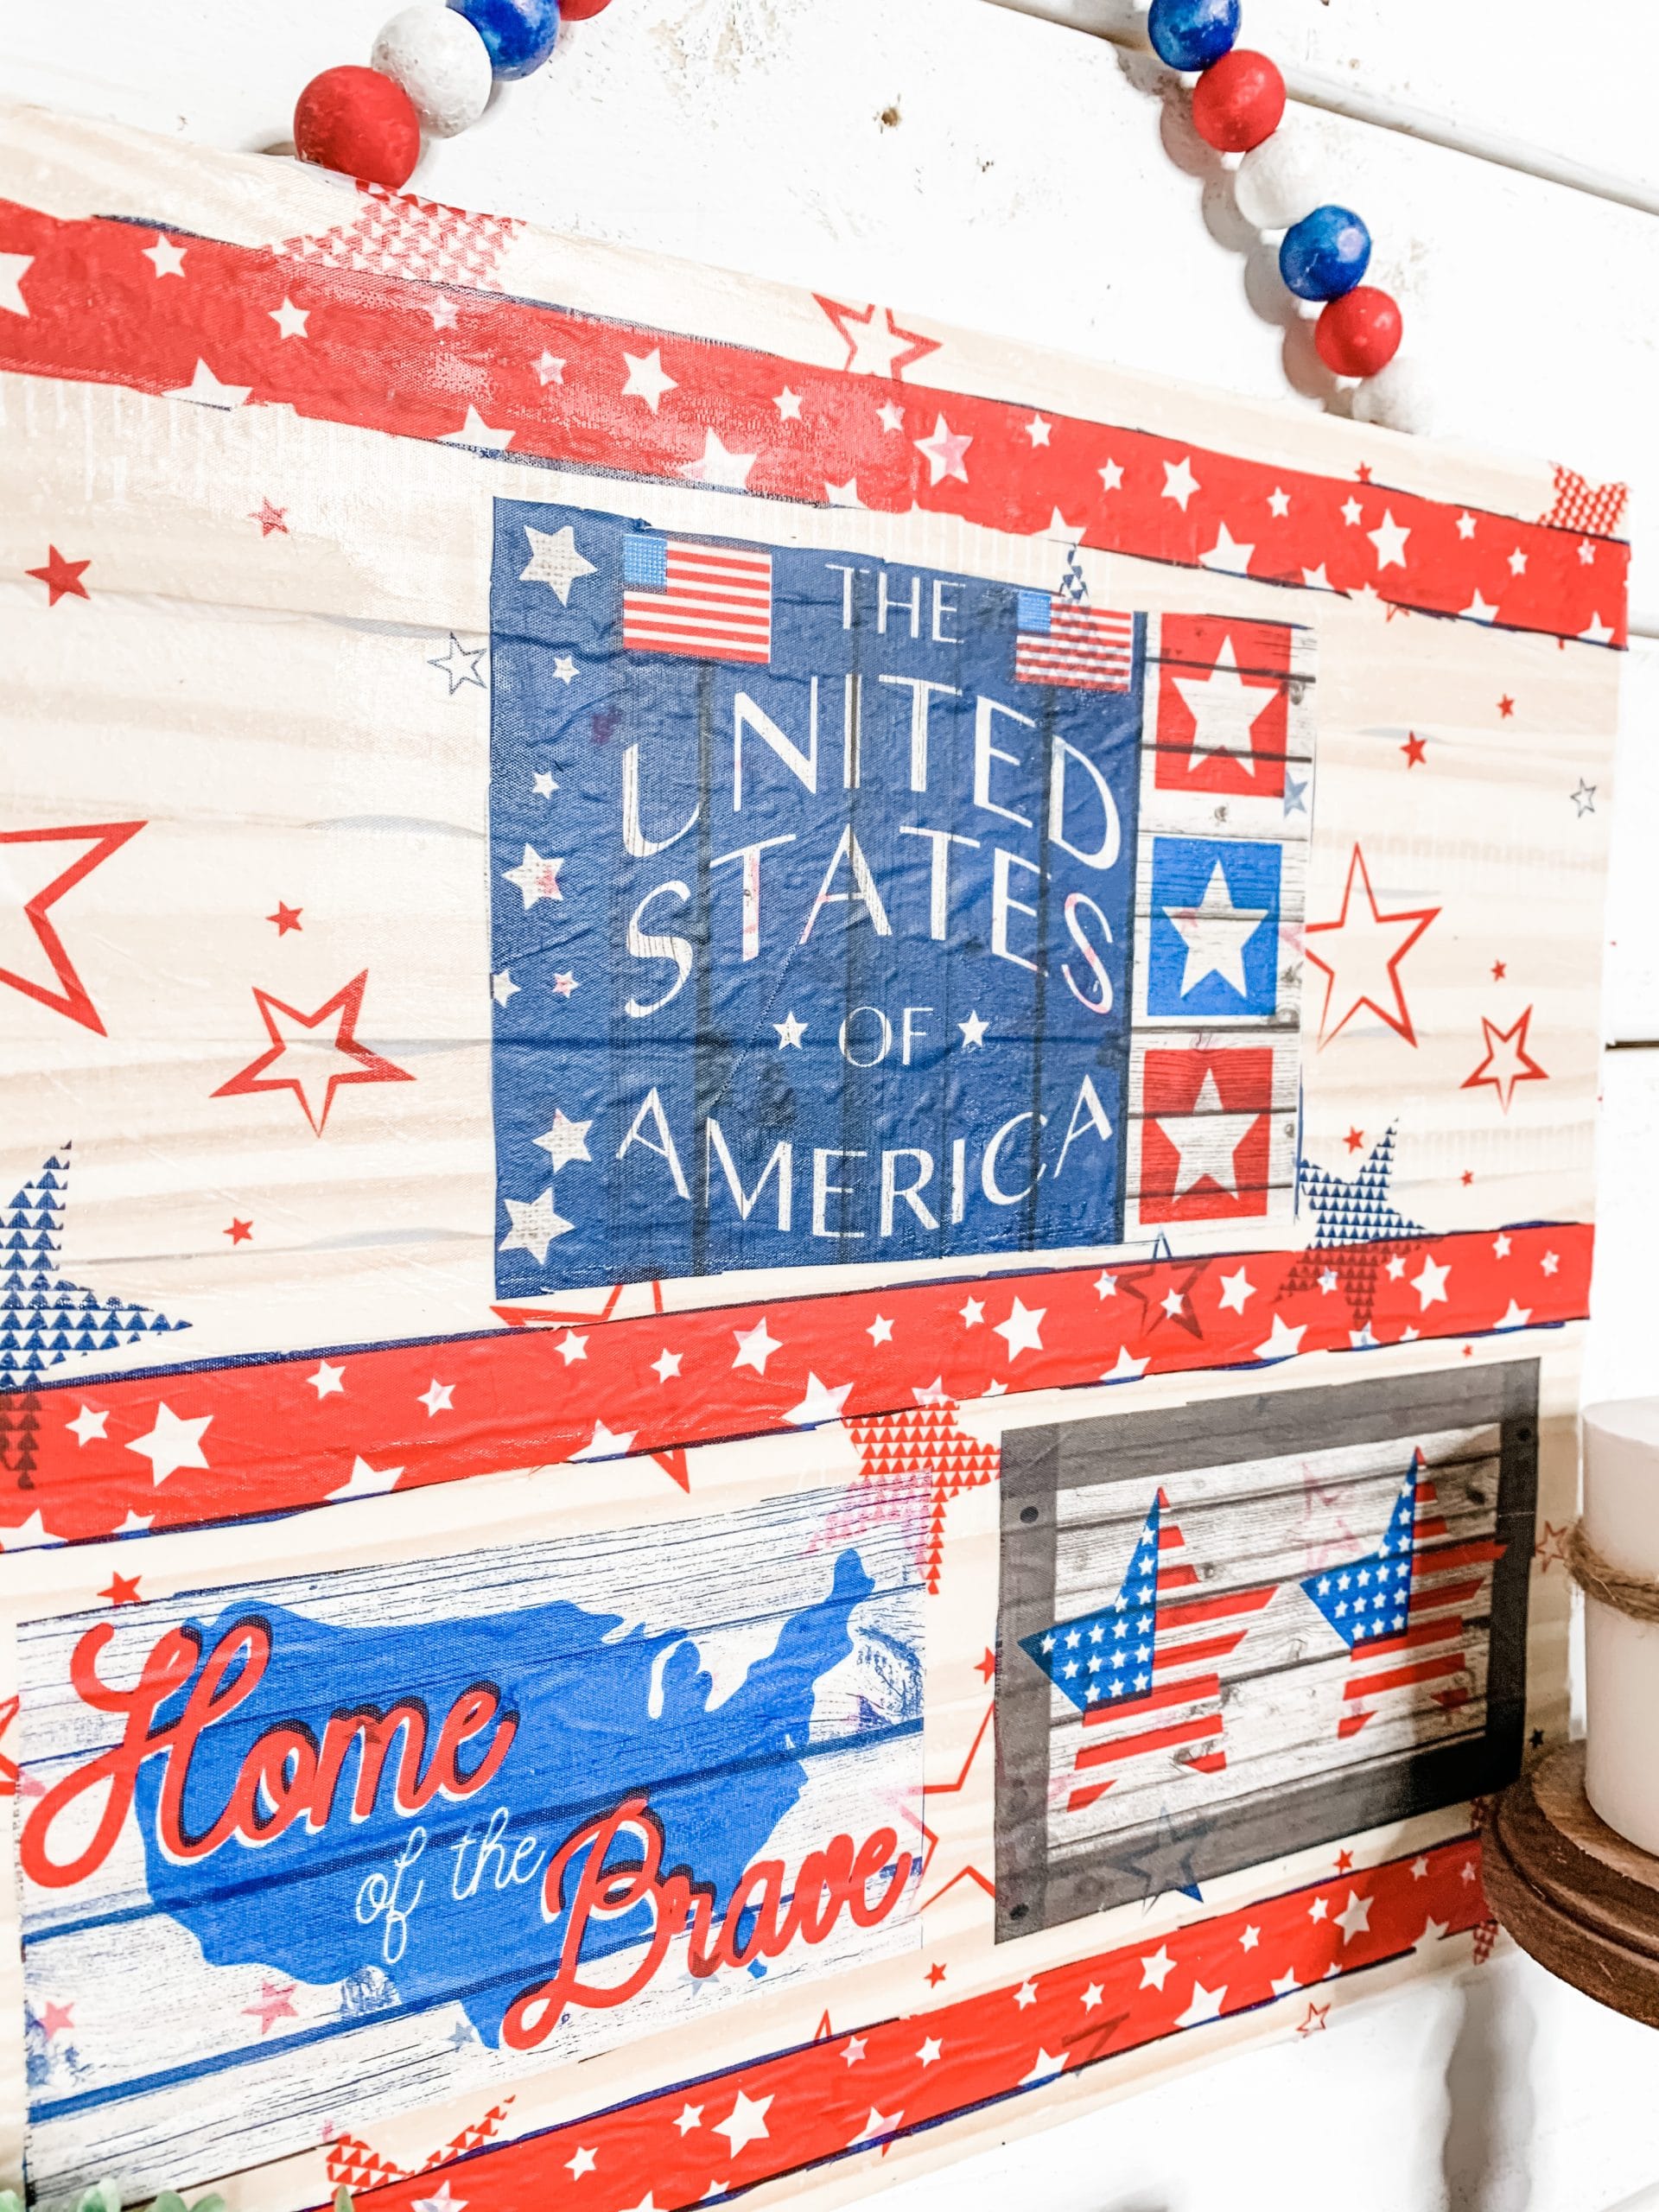 Repurposed Tablecloth DIY Patriotic Decor